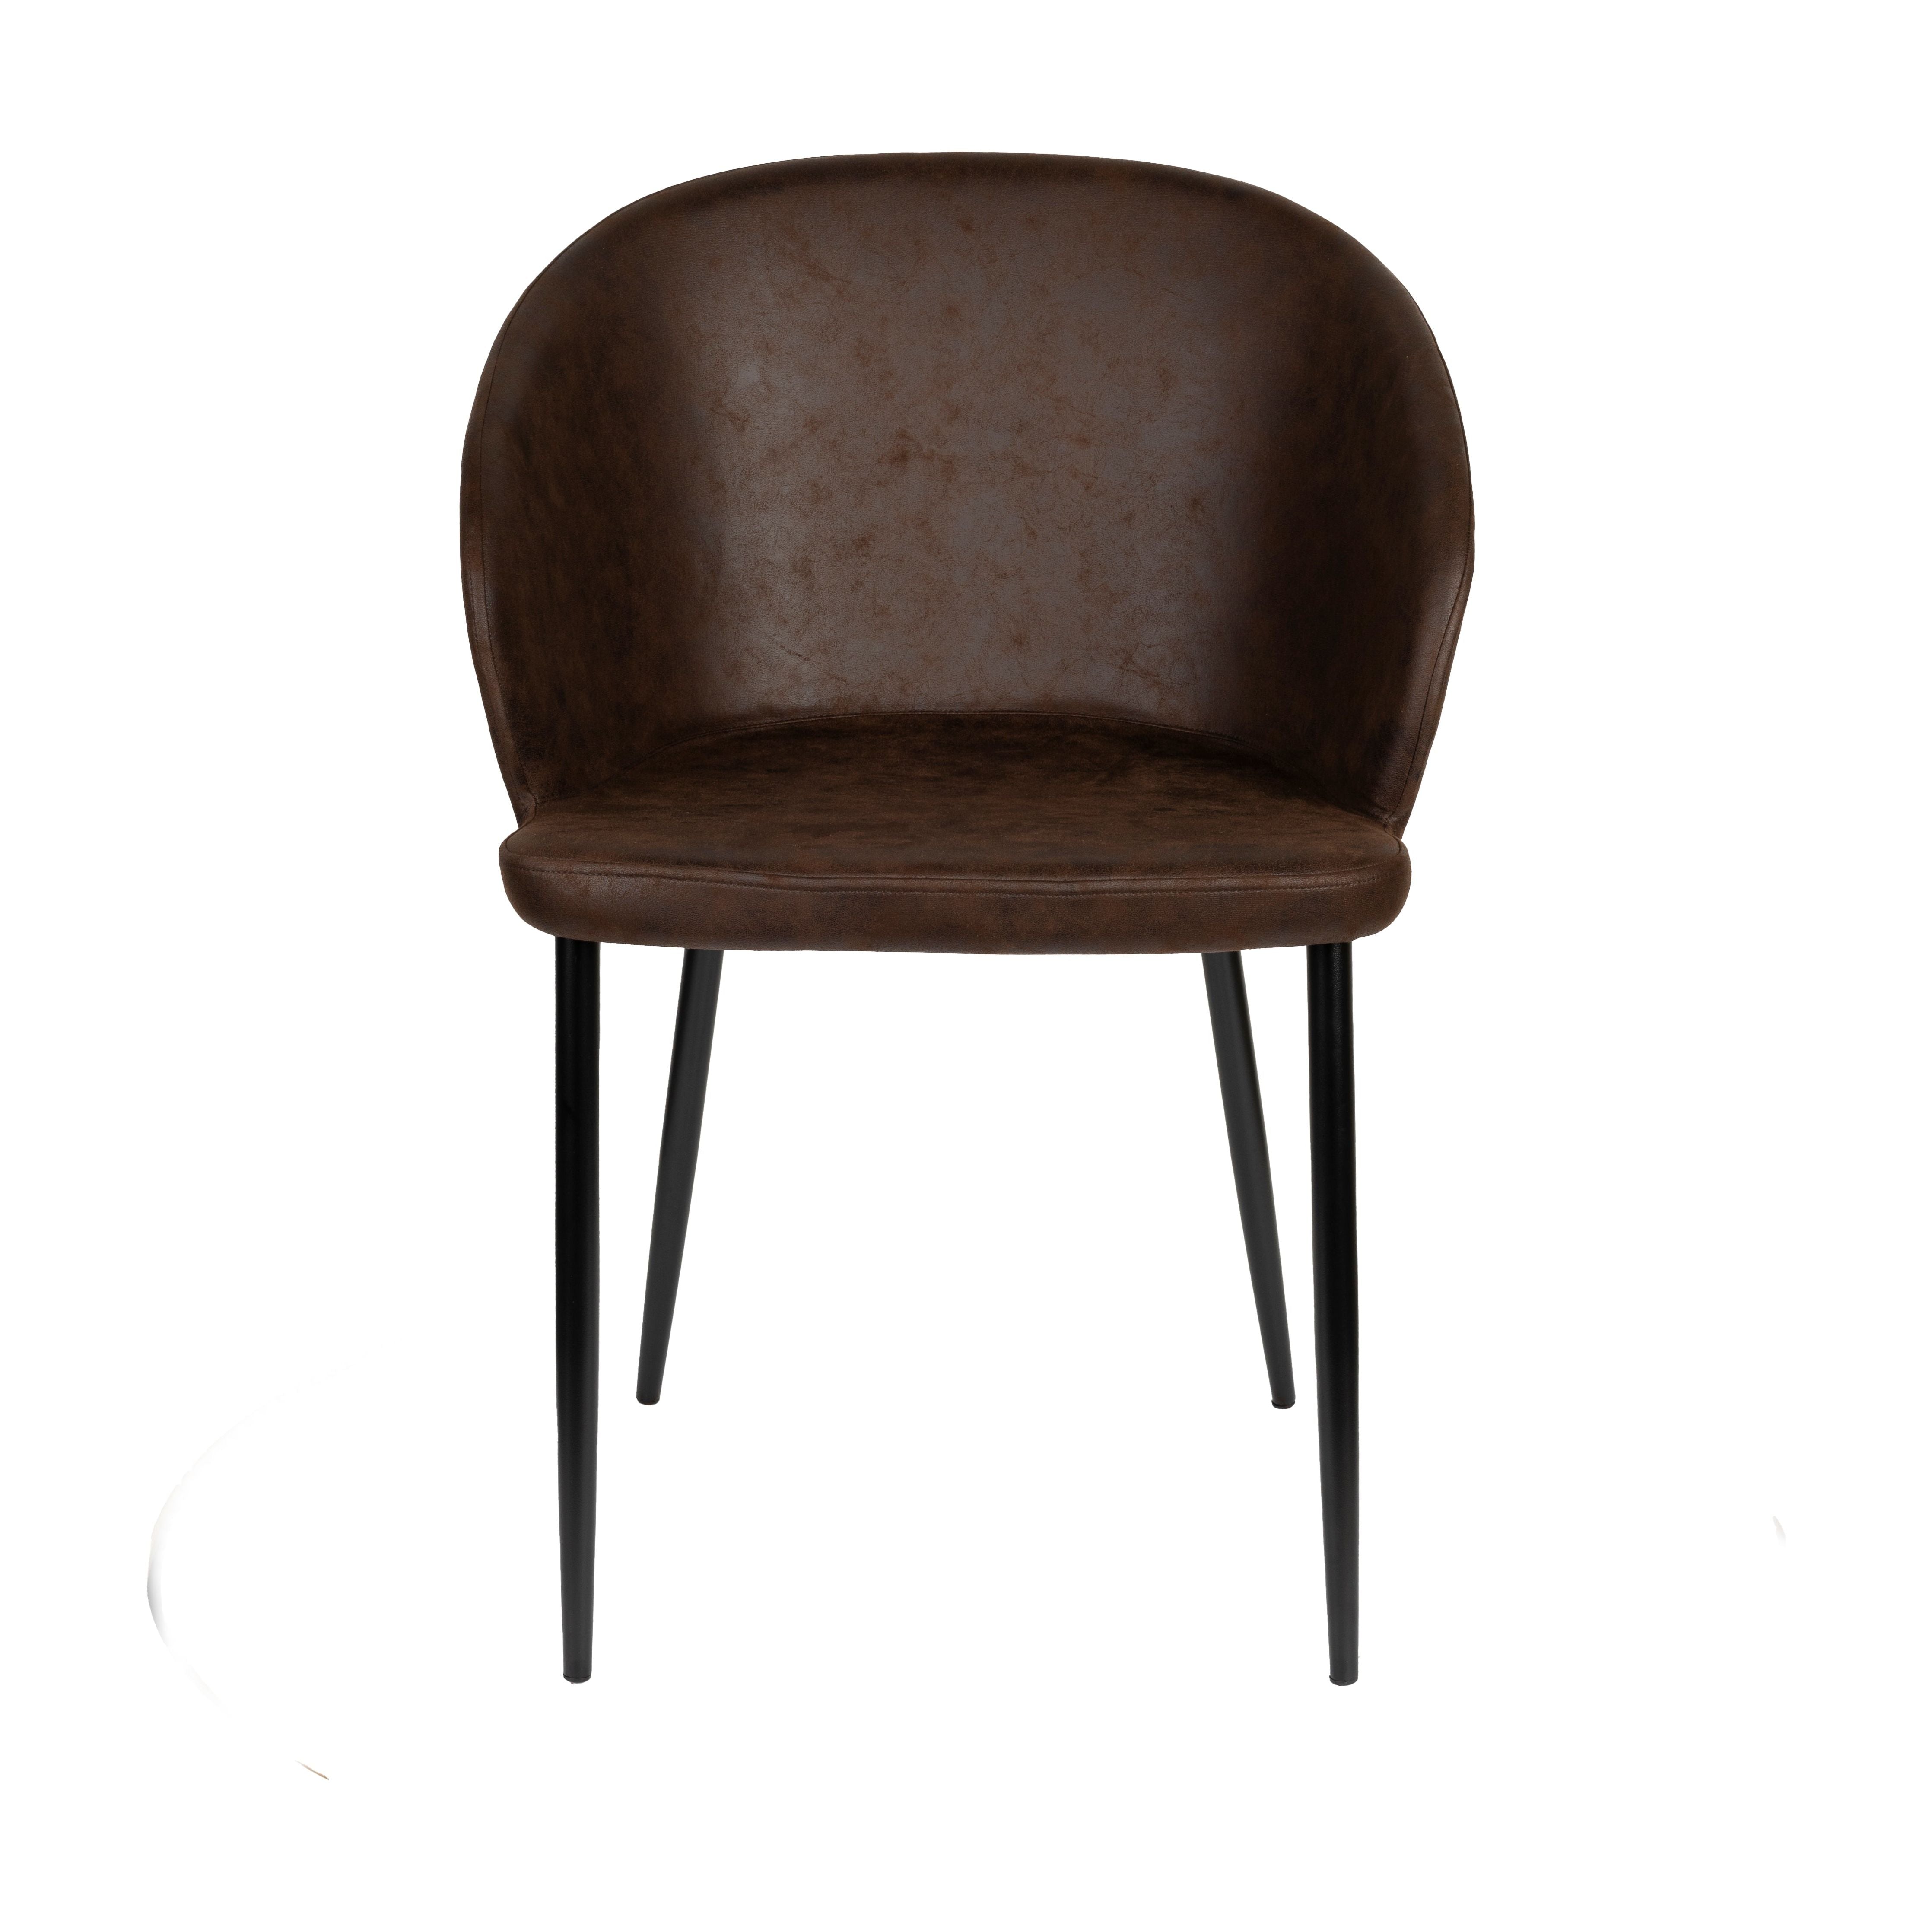 Chair hadid brown